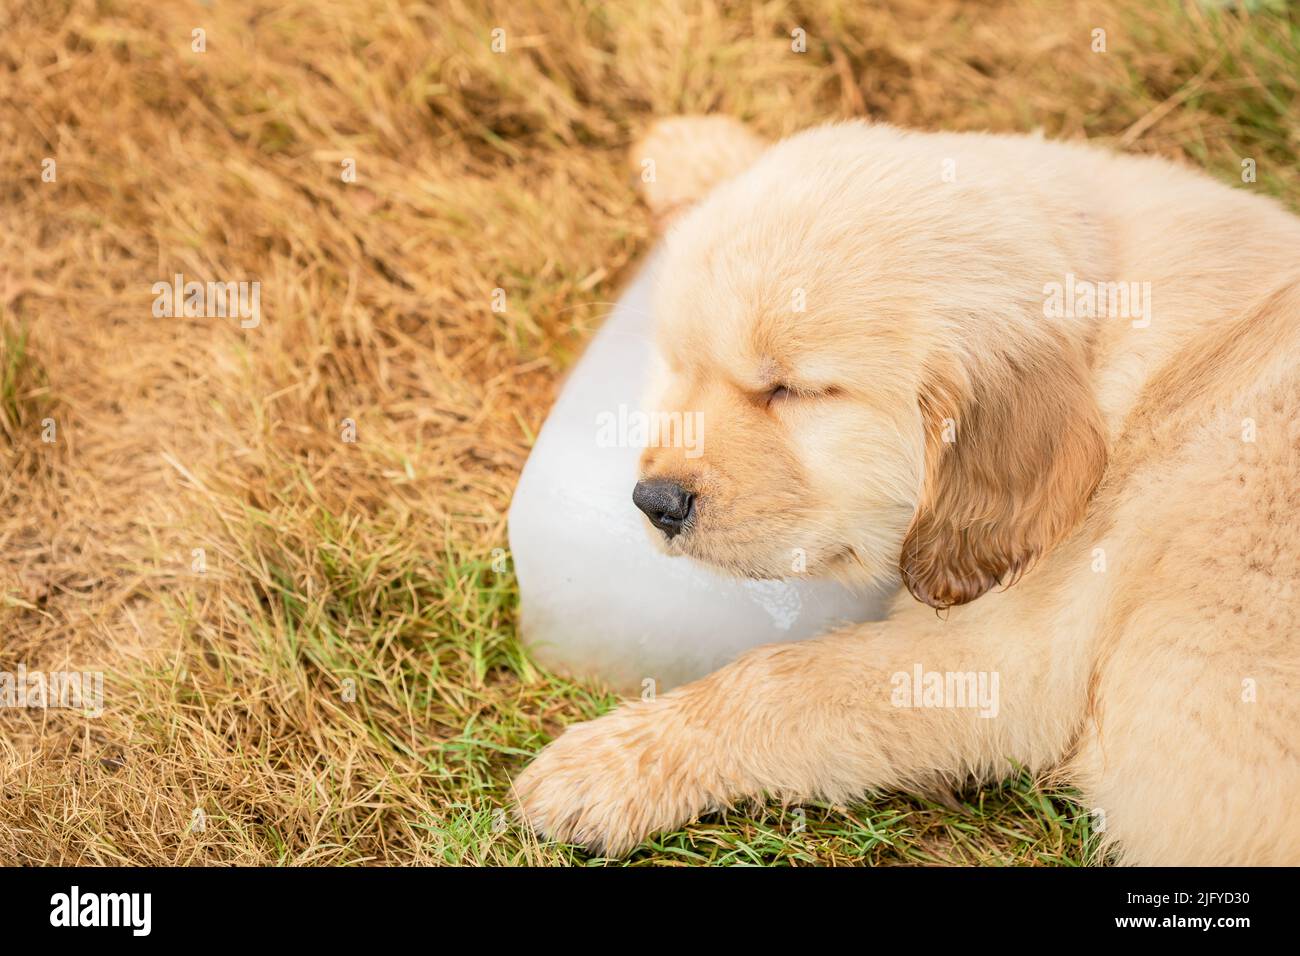 Little cute puppy (Golden Retriever) sleeping on the ice cube in the garden. Animal in summer season concept Stock Photo